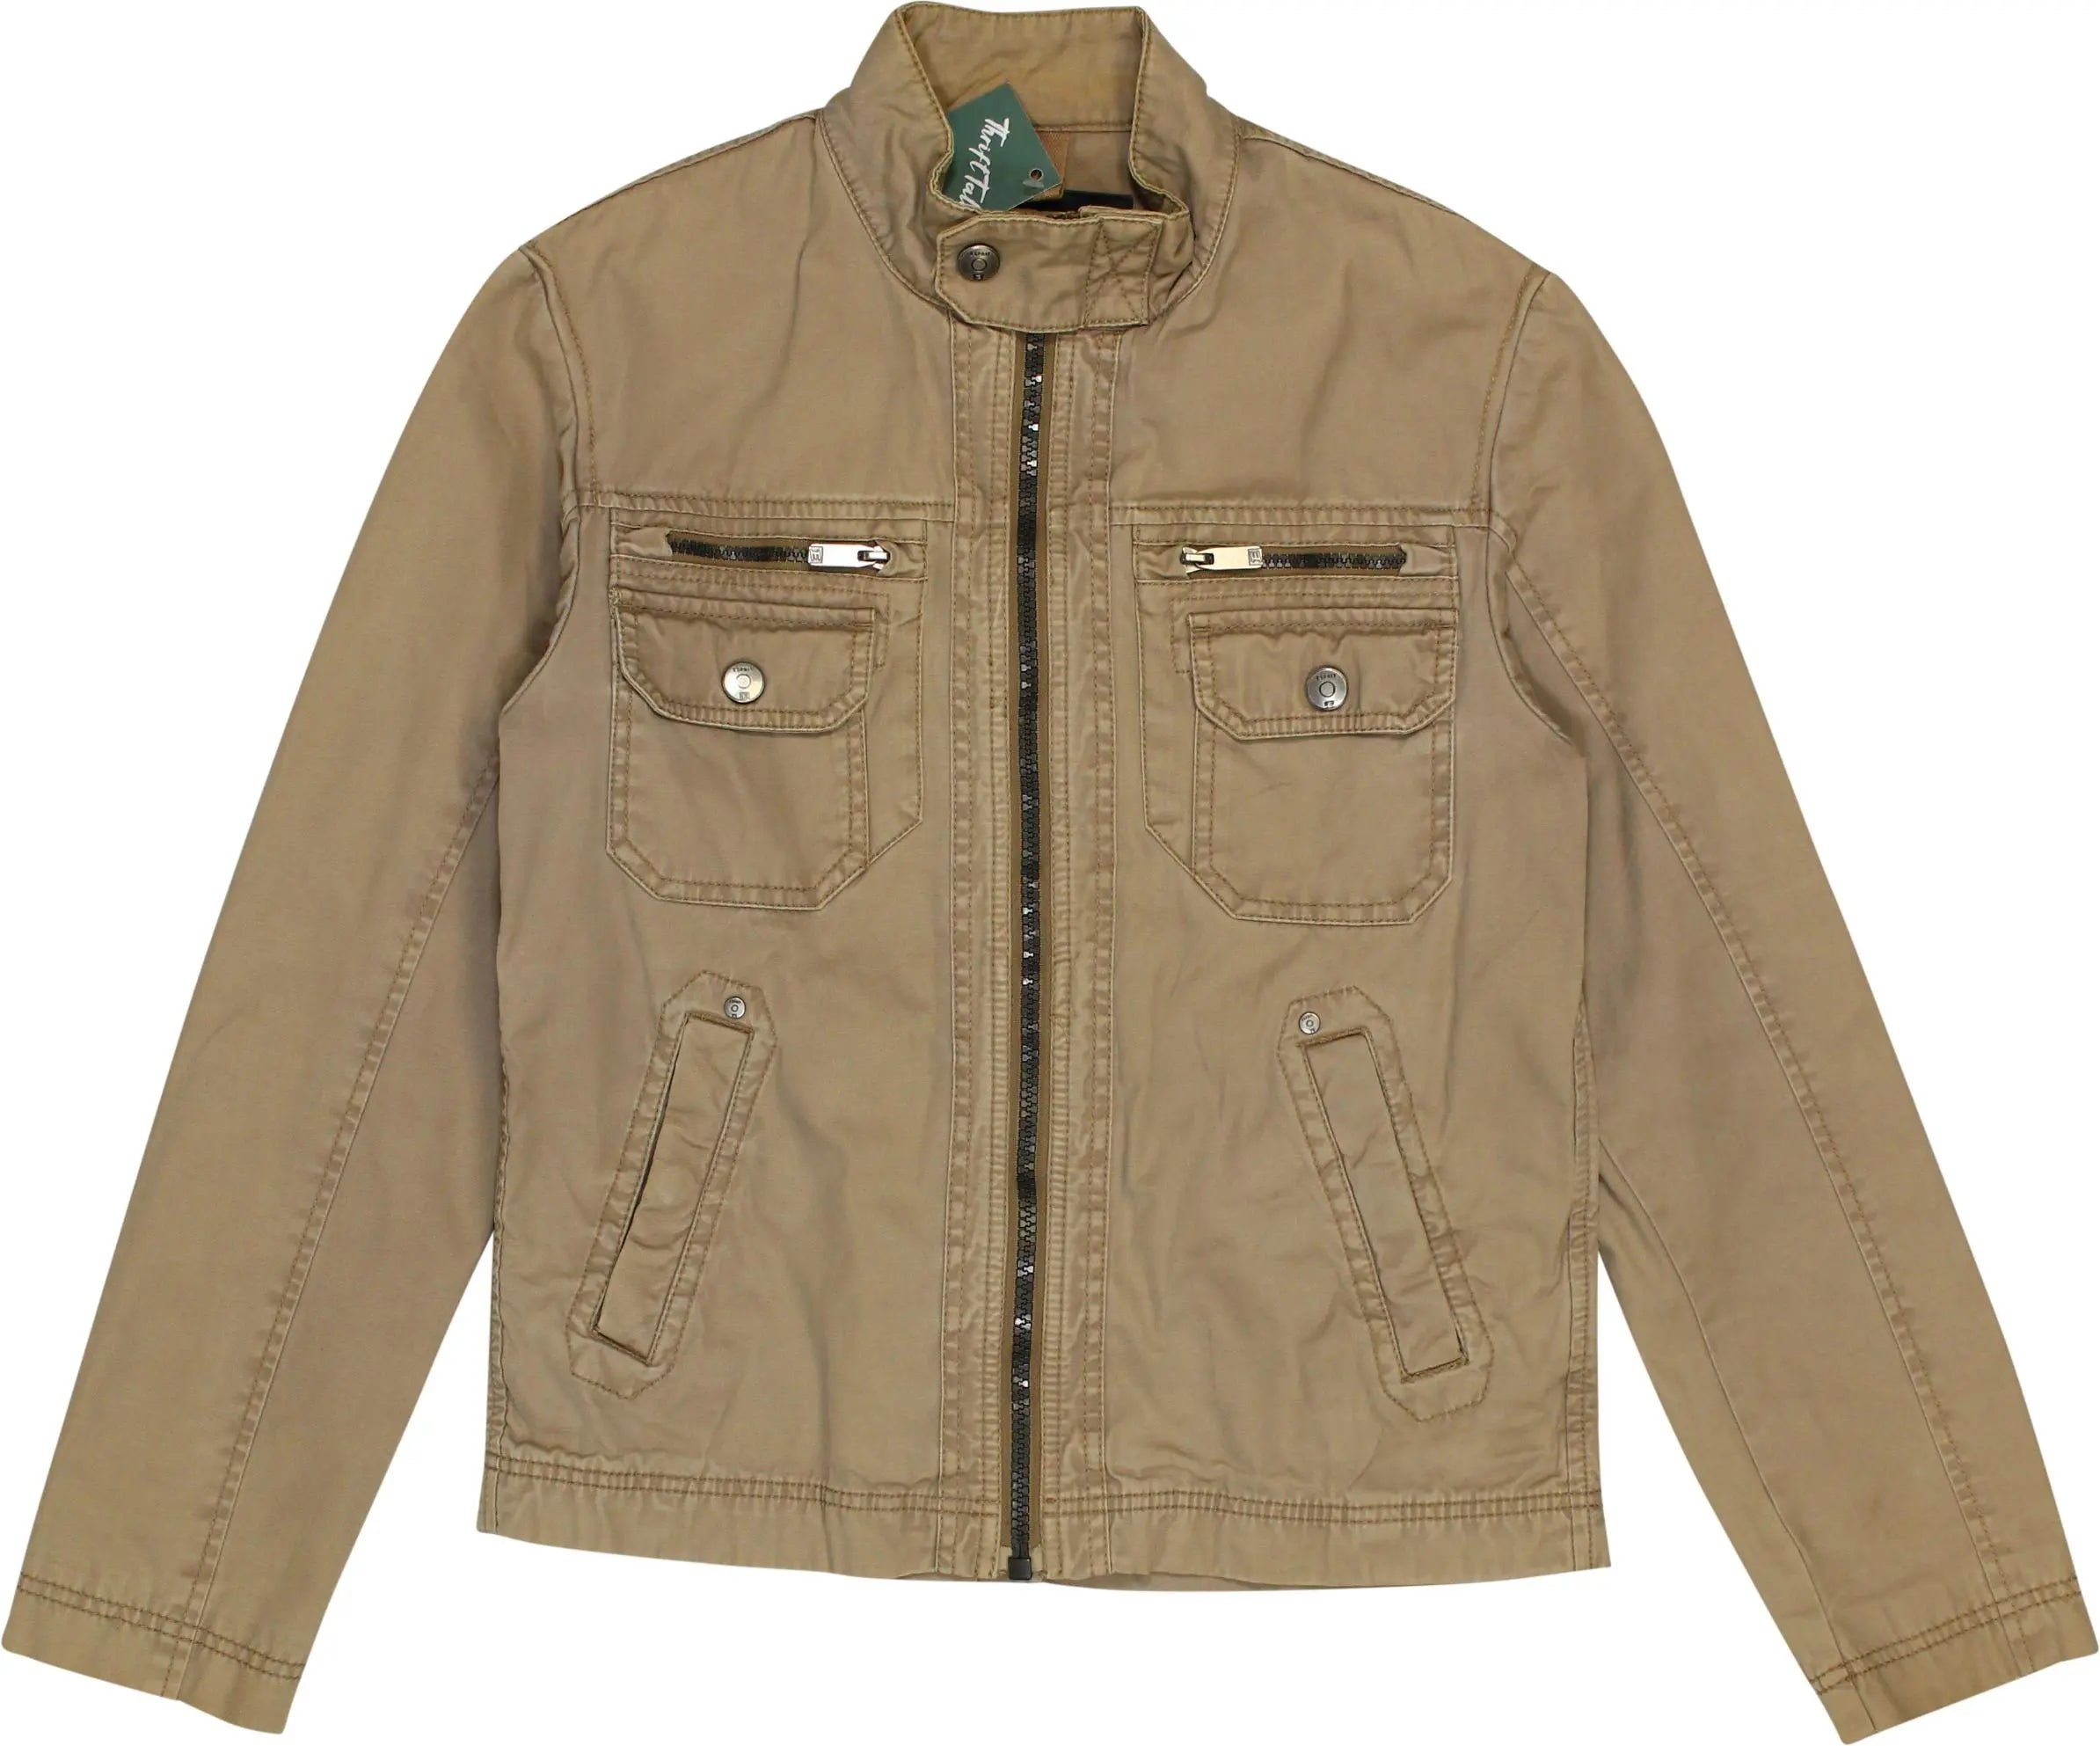 Esprit - Beige Jacket- ThriftTale.com - Vintage and second handclothing